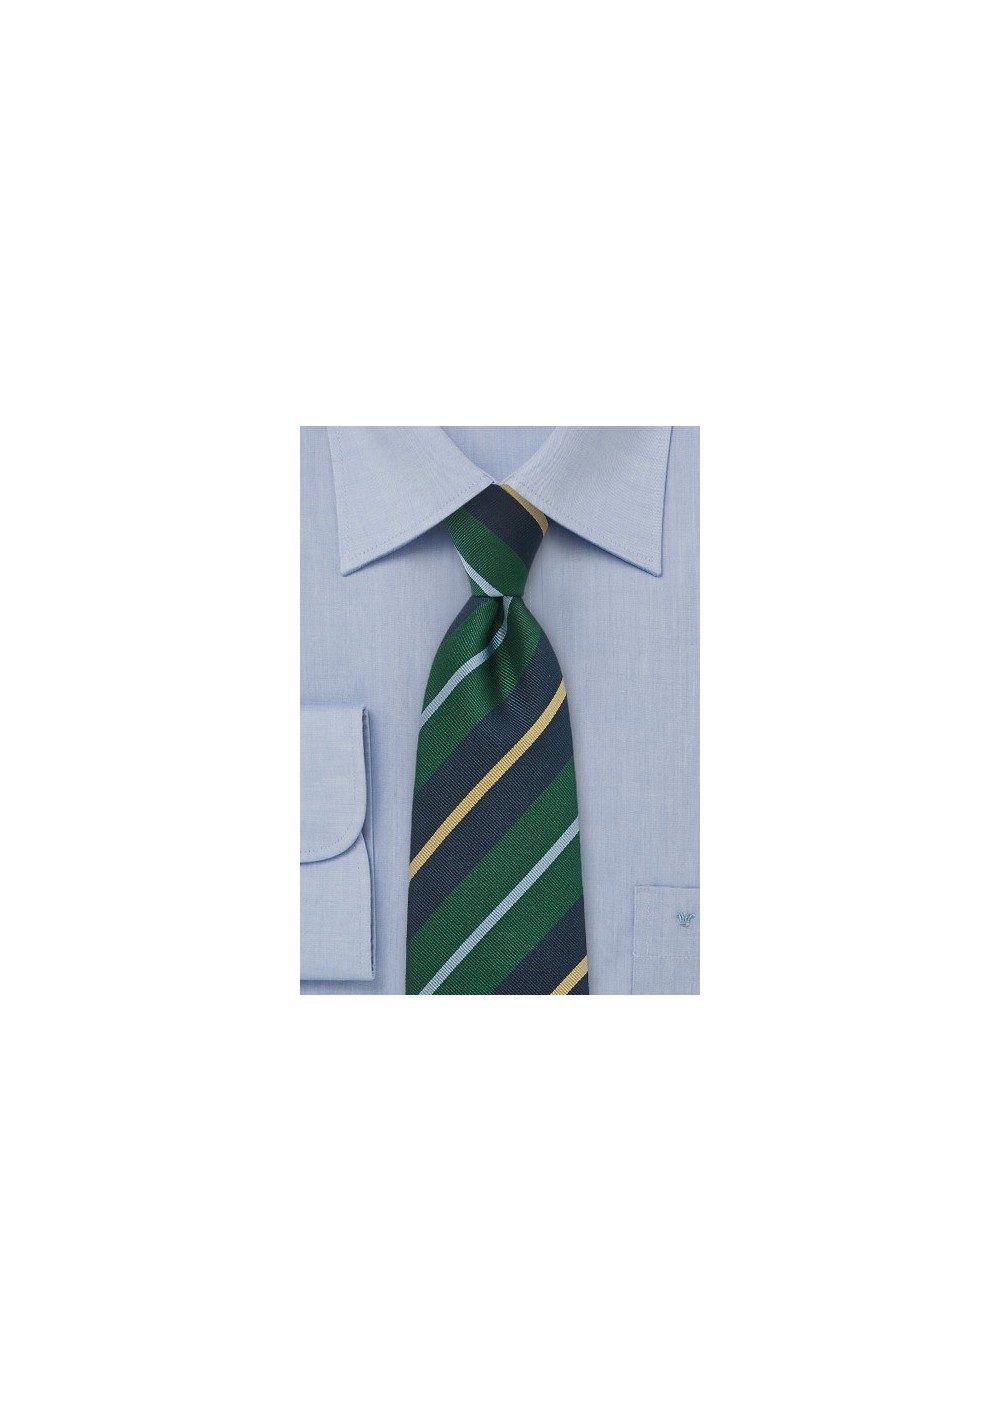 Essential Regimental Tie in Green